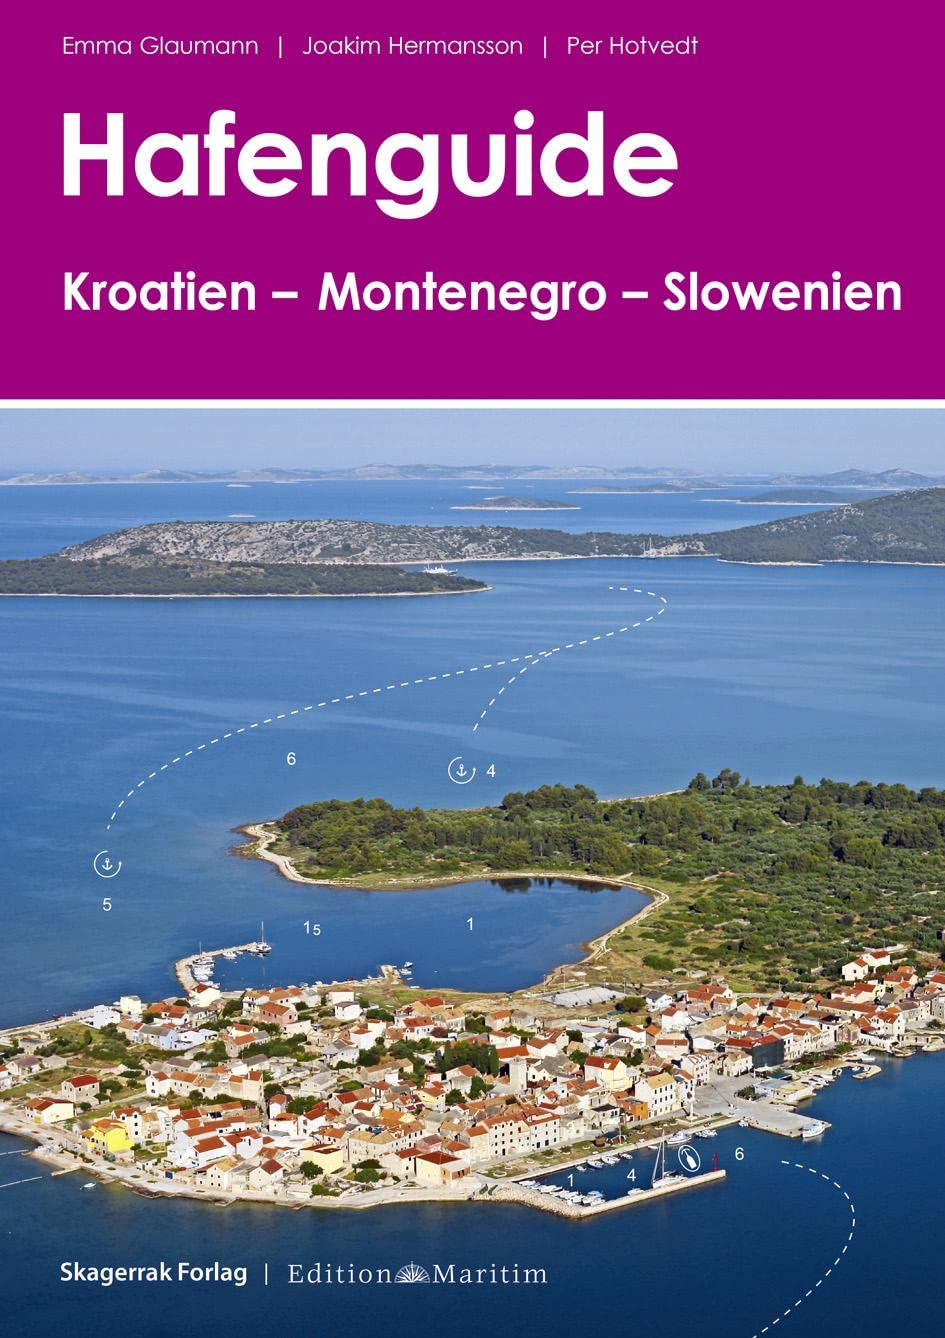 DELIUS KLASING Hafenguide Kroatien–Montenegro–Slowenien